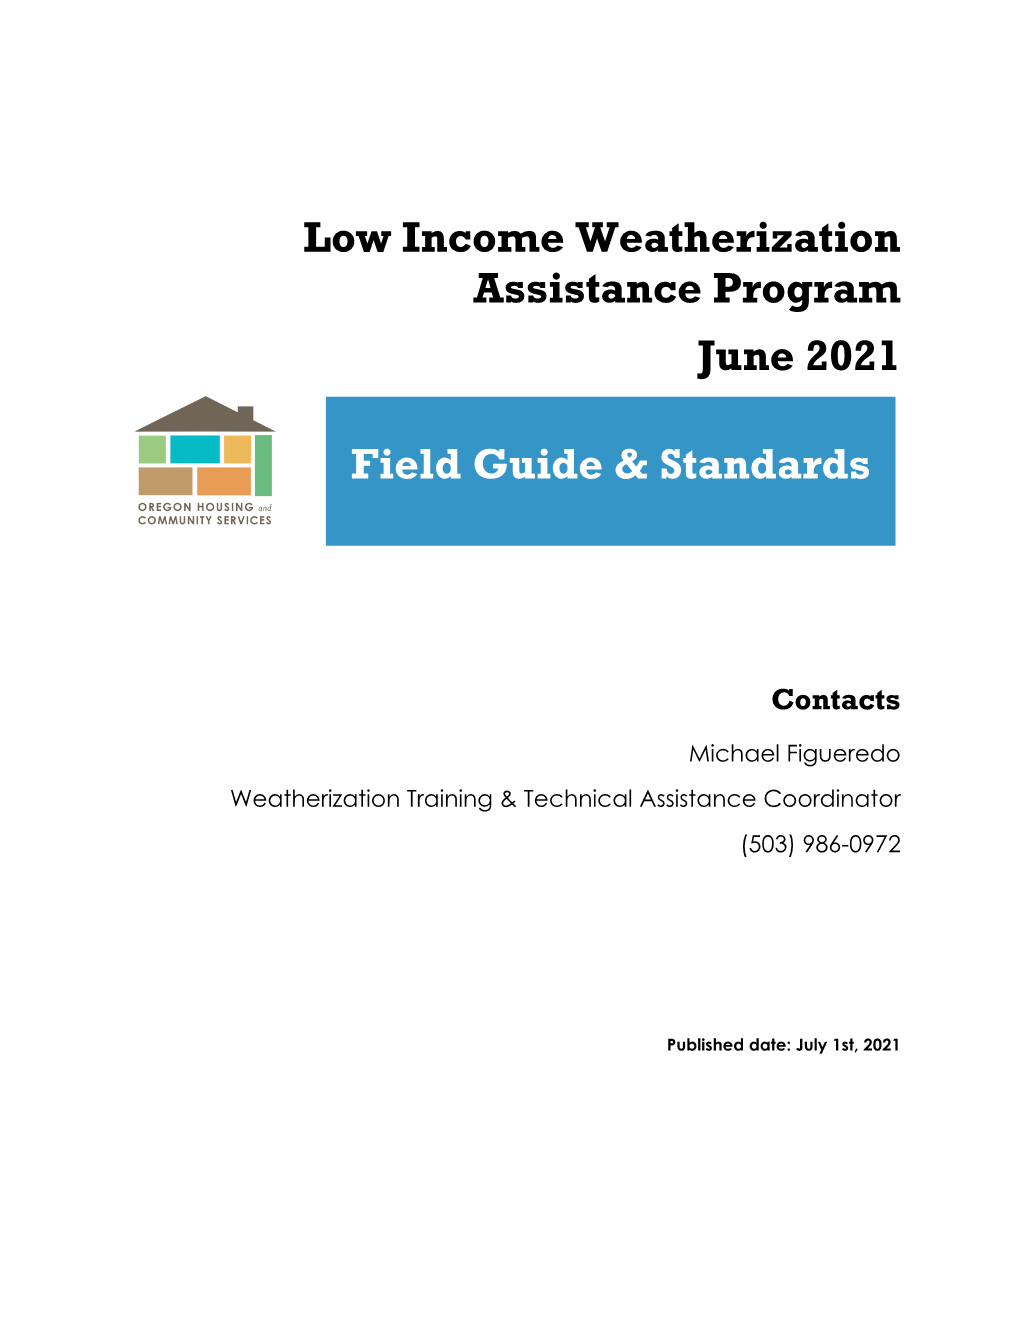 Low Income Weatherization Assistance Program June 2021 Field Guide & Standards